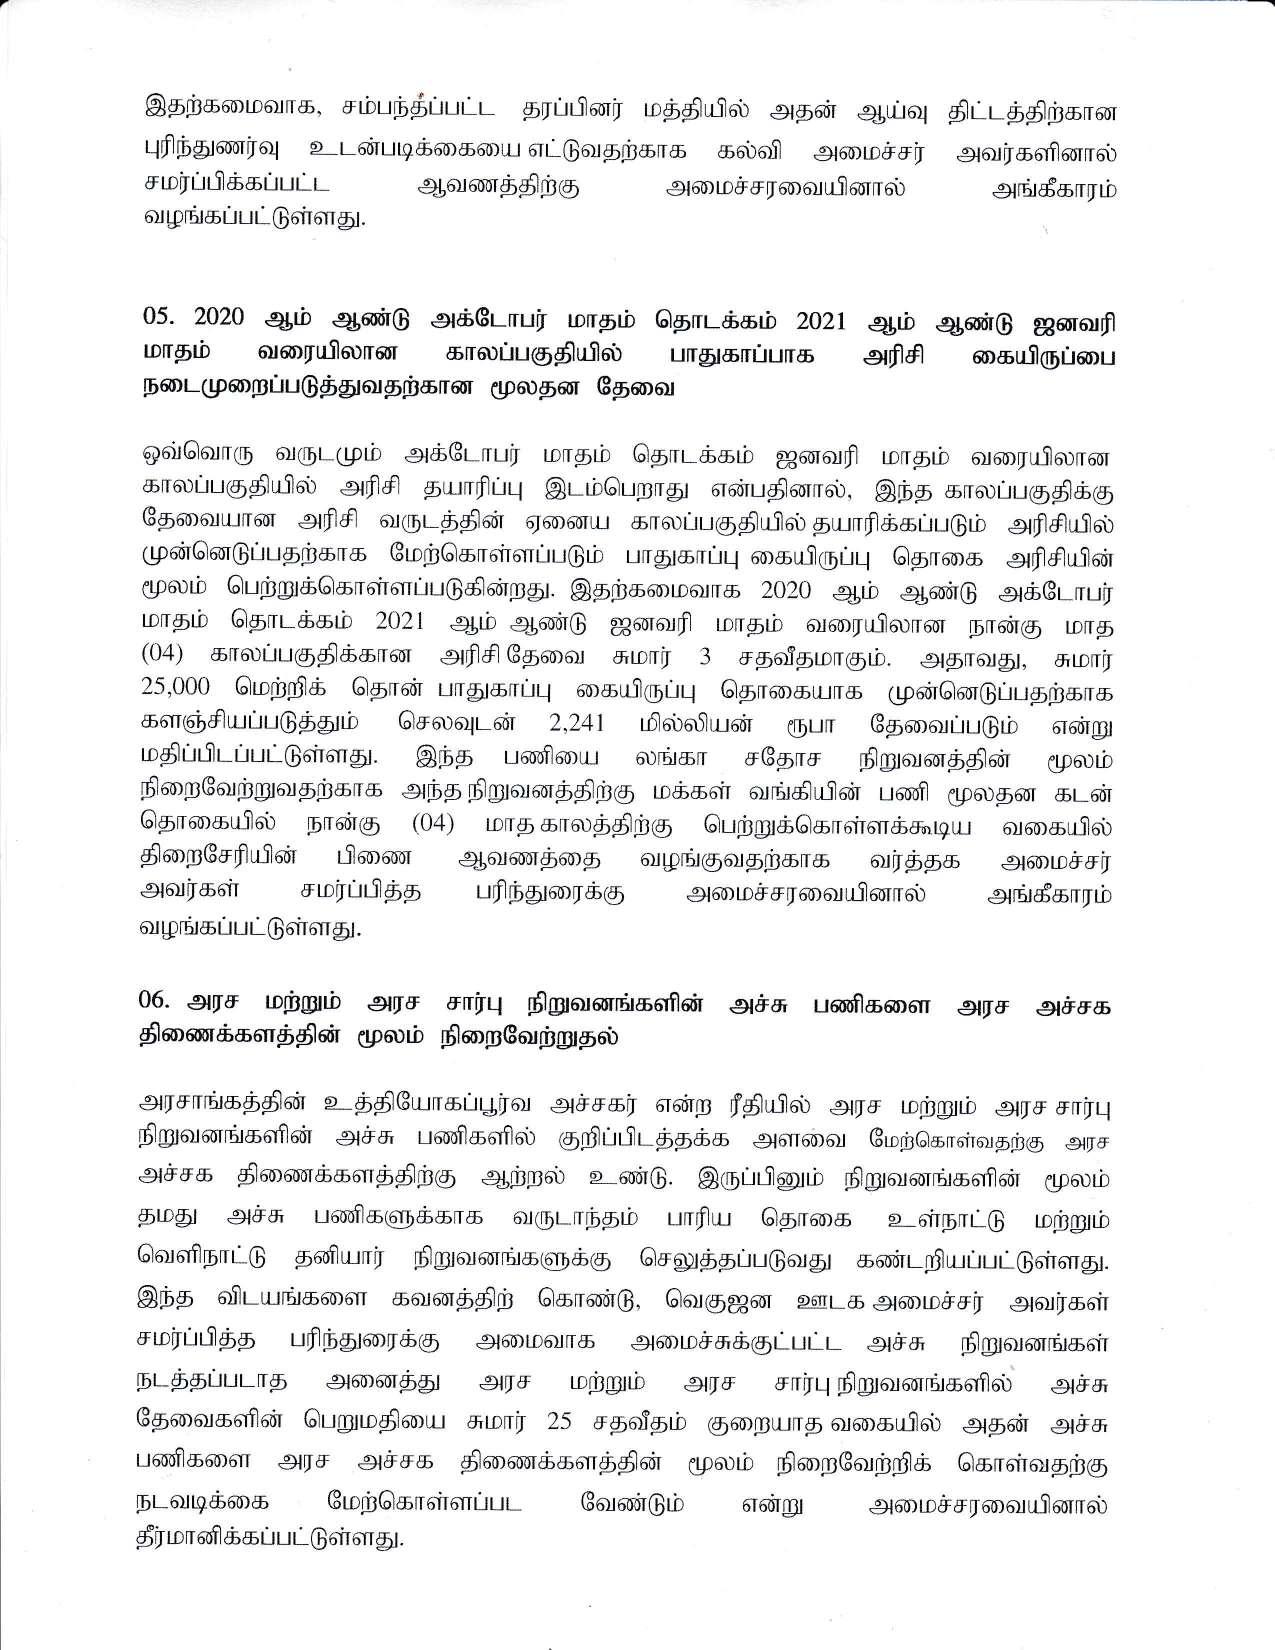 cabinet Desicion on 28.09.2020 Tamil 1 page 004